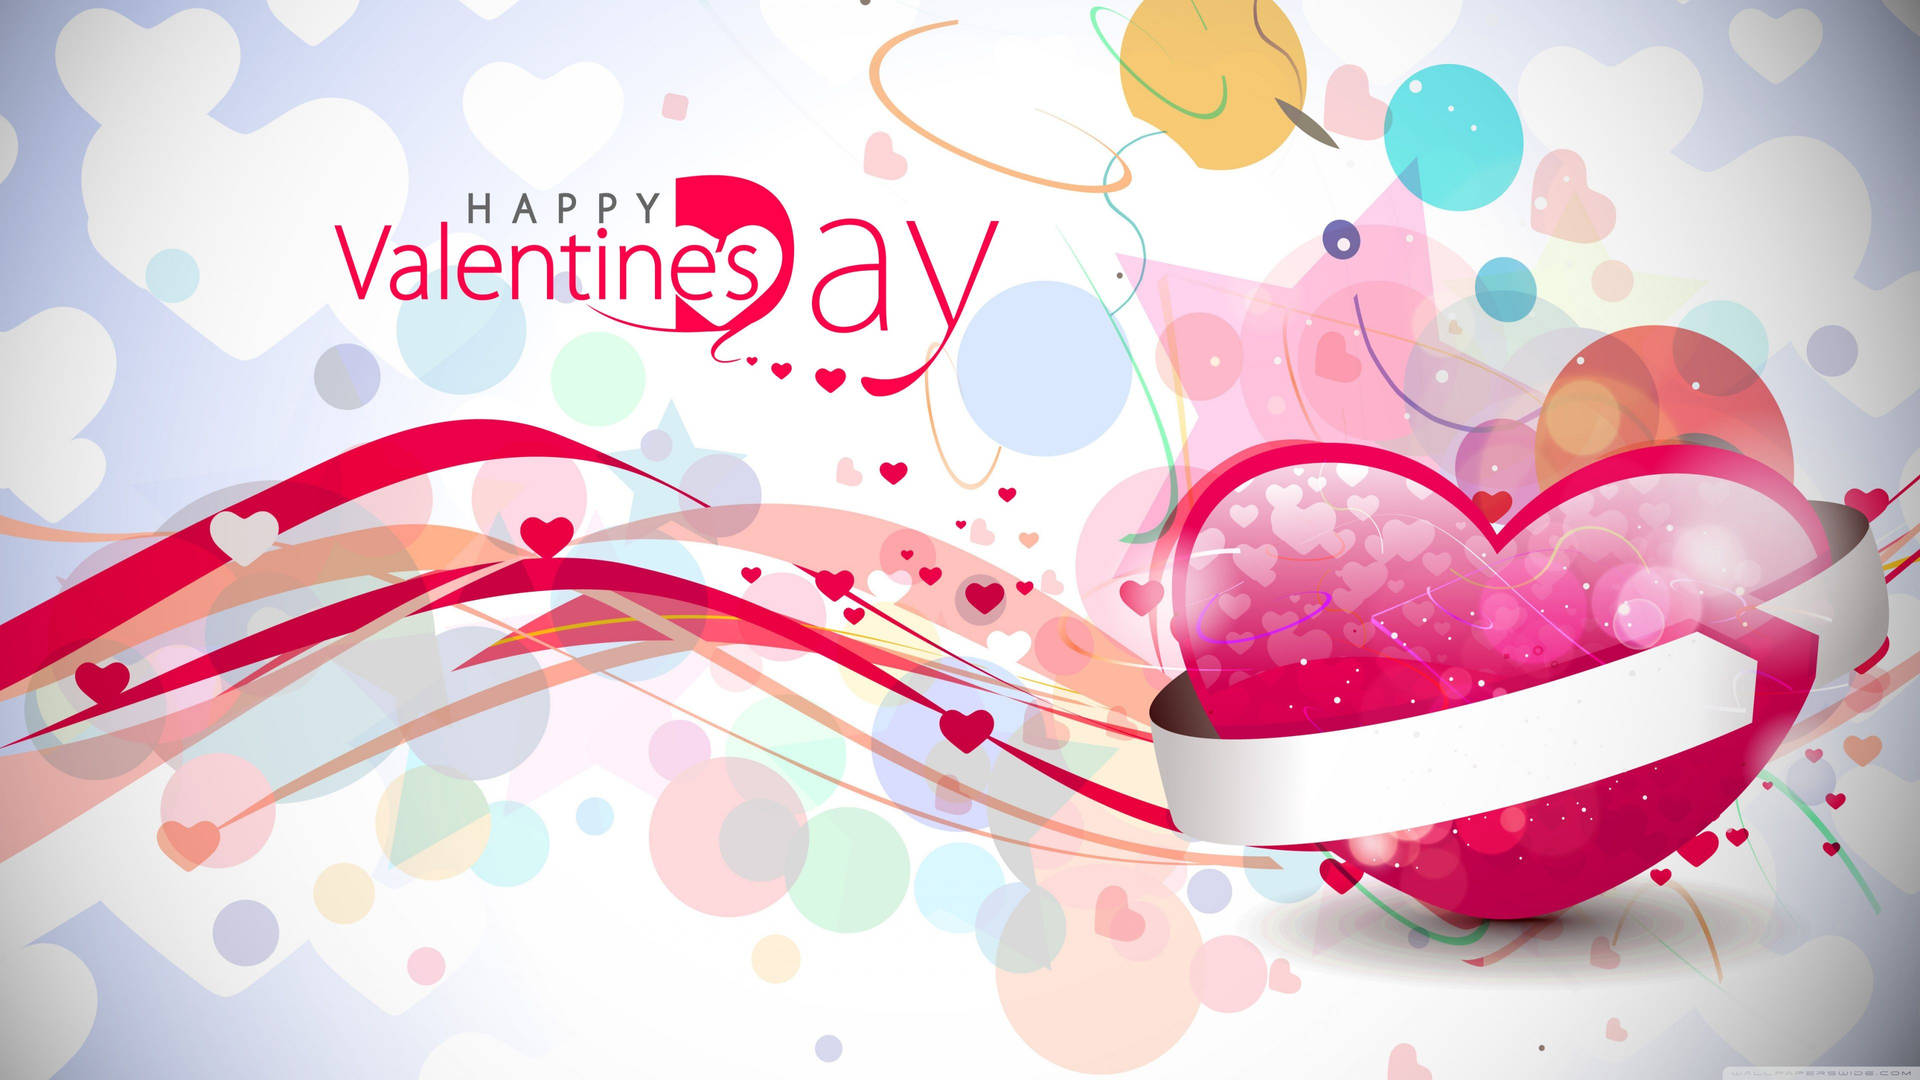 Artistic Valentine's Greeting Desktop Background